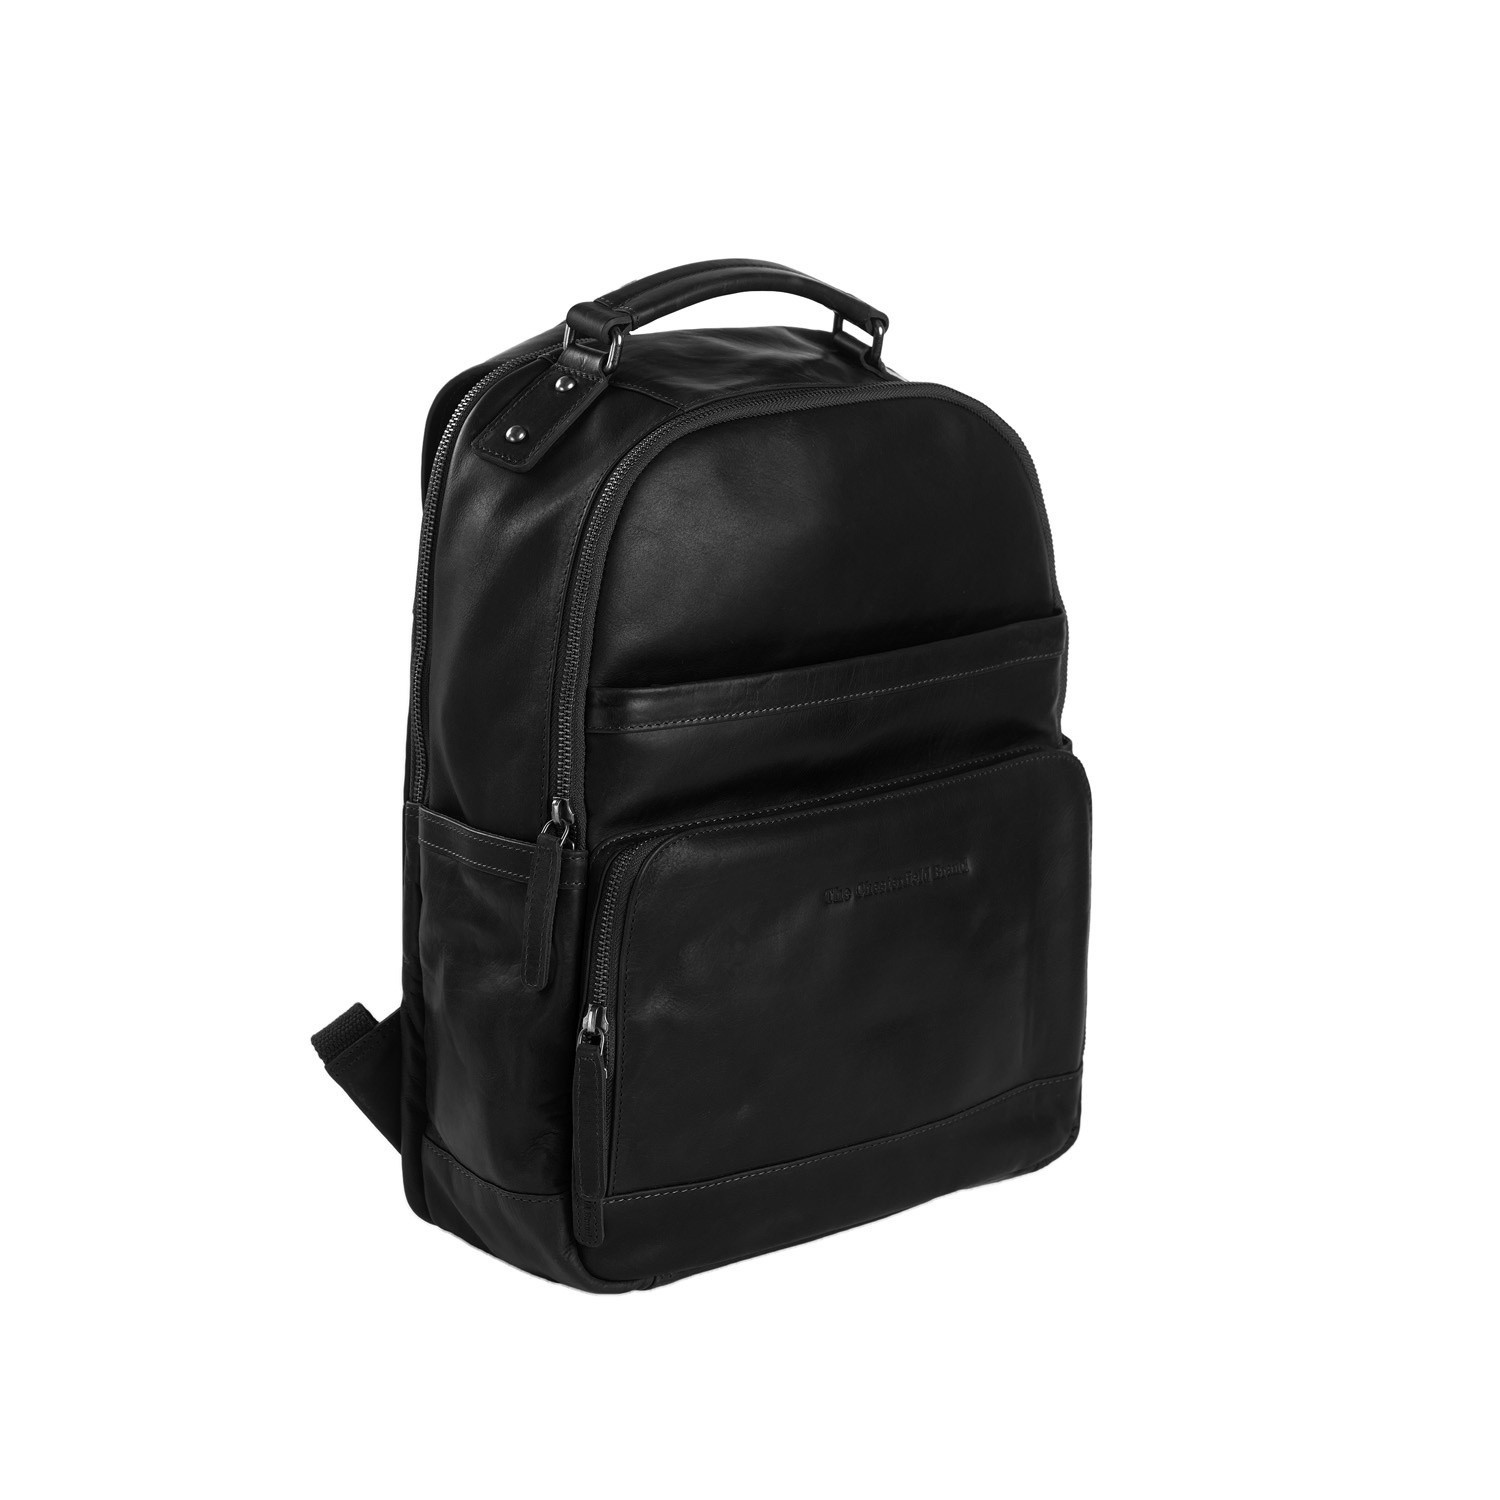 Backpack "Austin" black